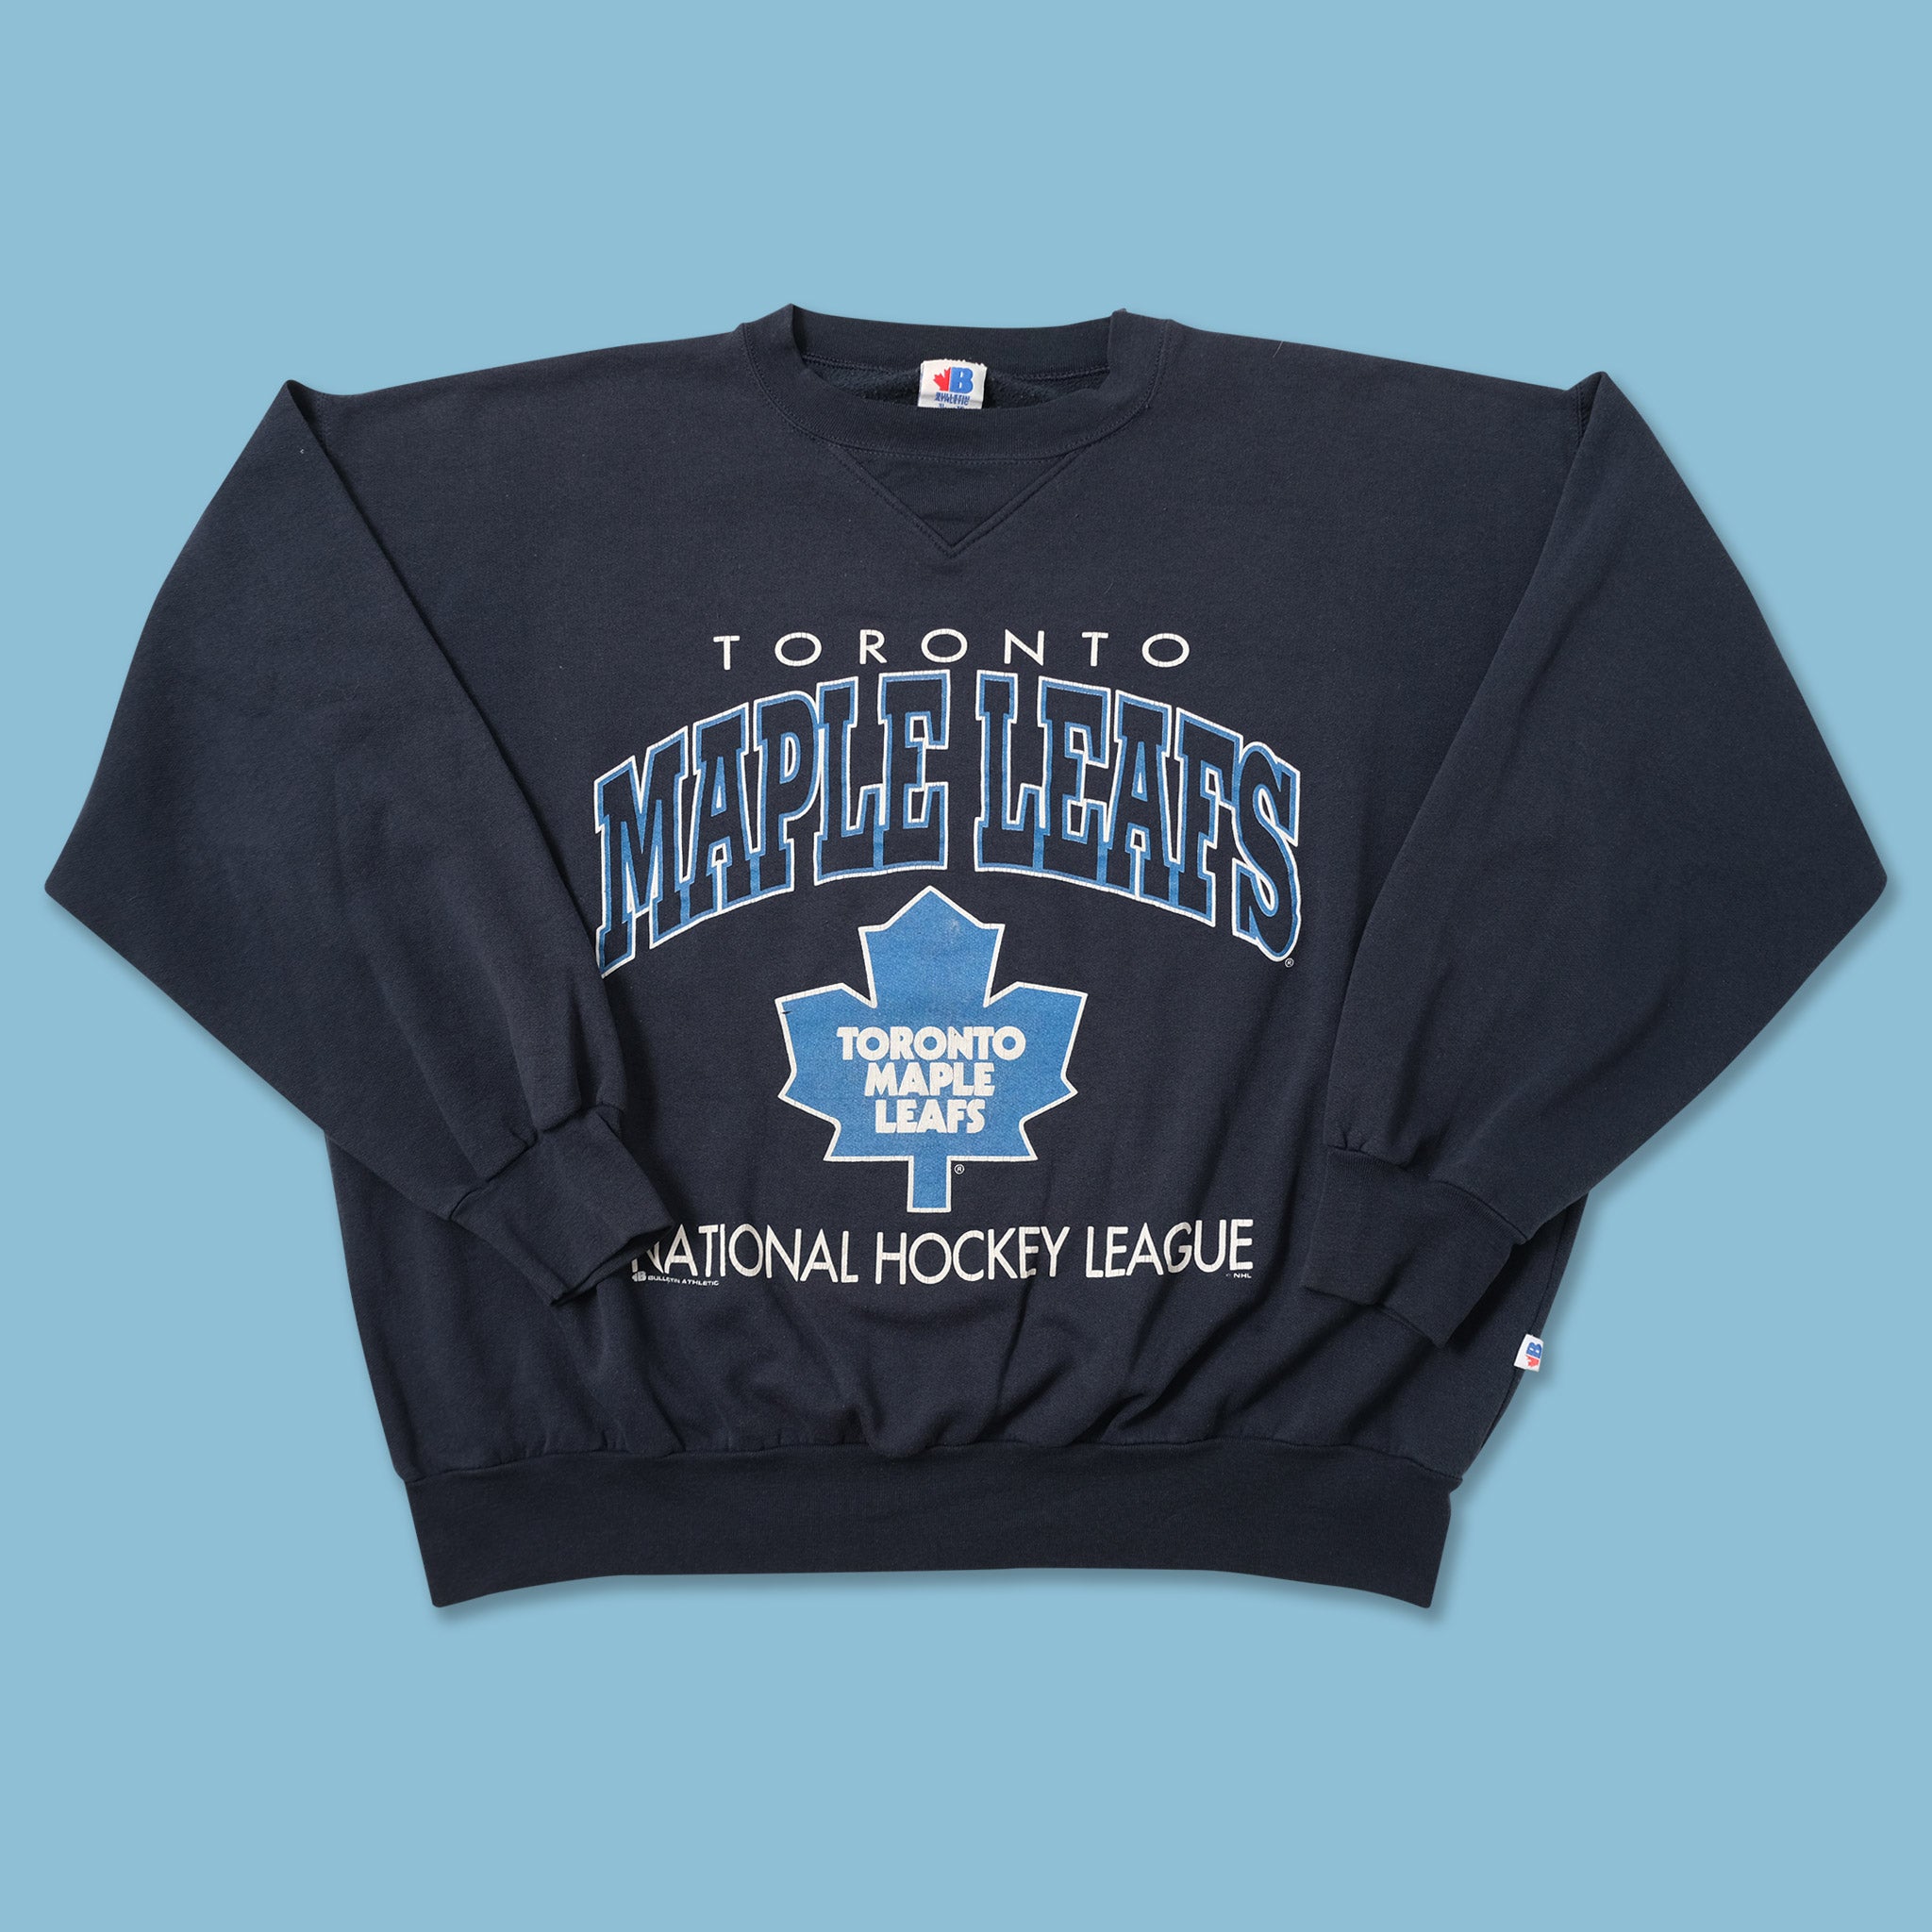 Vintage Toronto Maple Leafs Sweater. #CDNGetaway